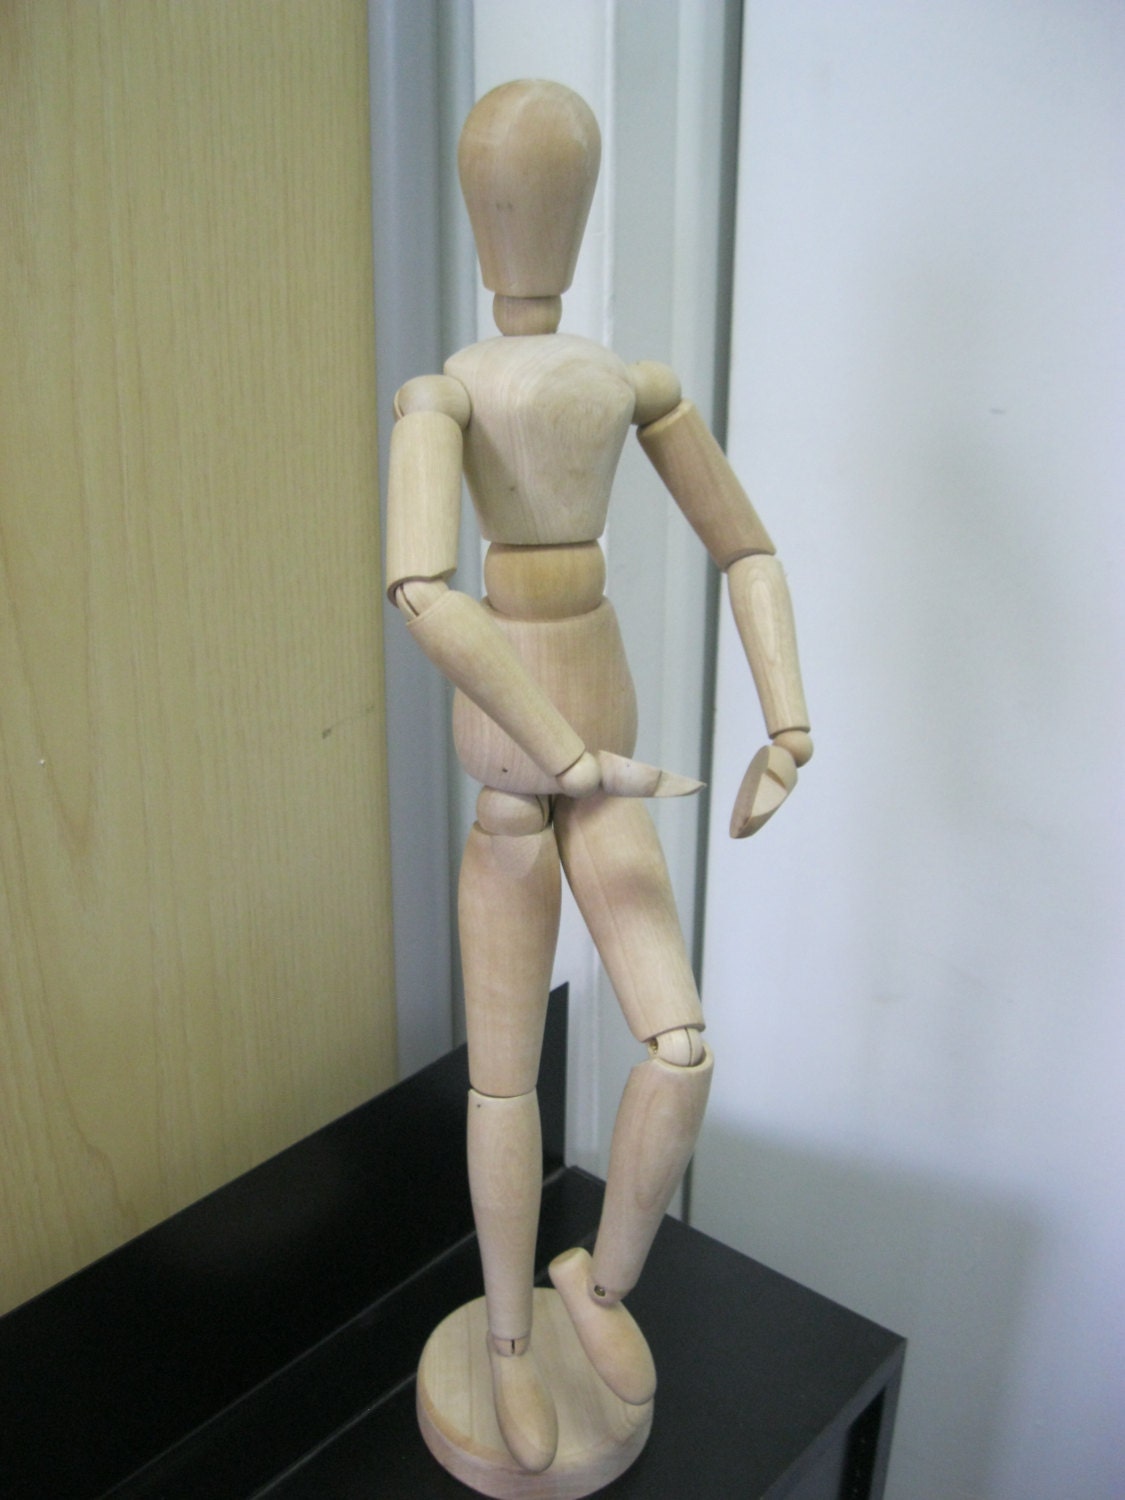 Seawhite Wooden Mannequin Figure - 12